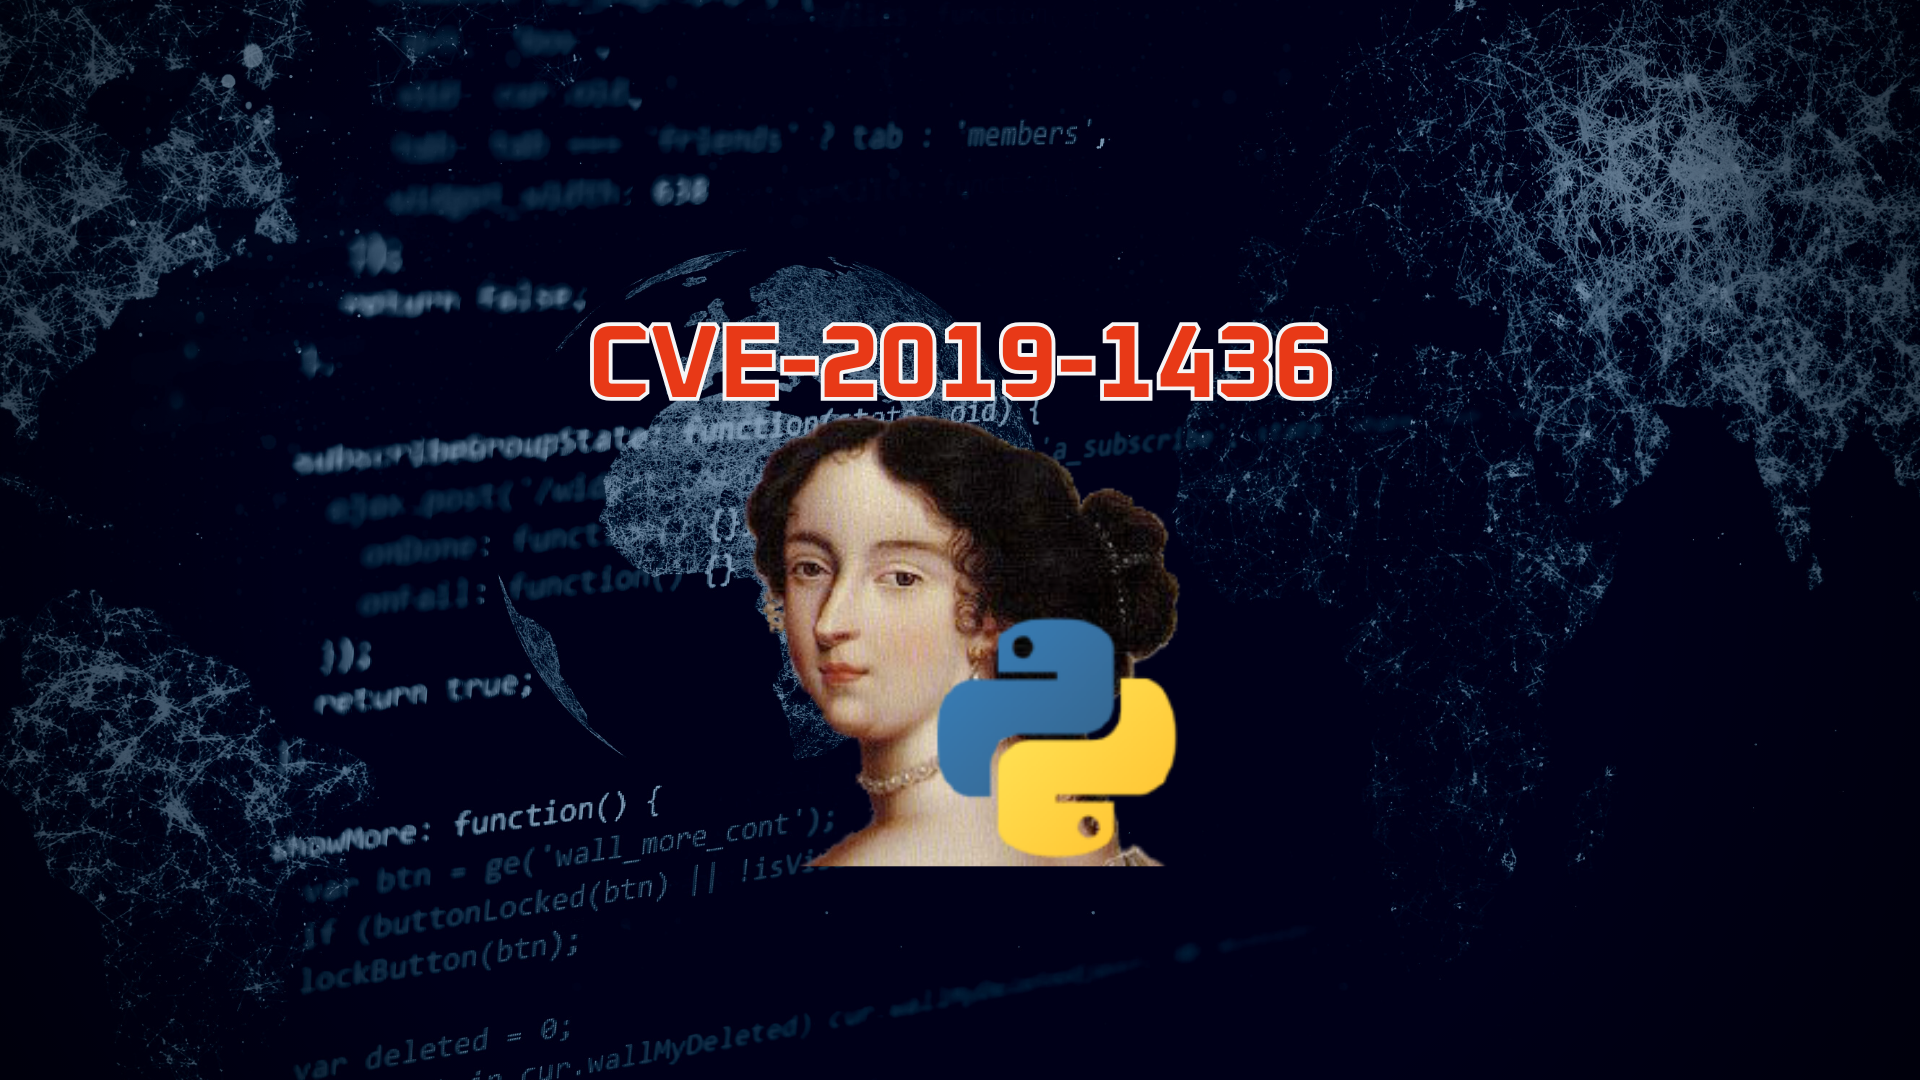 Automating CVE-2019-1436 Variant Analysis: An Intro to Detecting Information Leaks via IDAPython